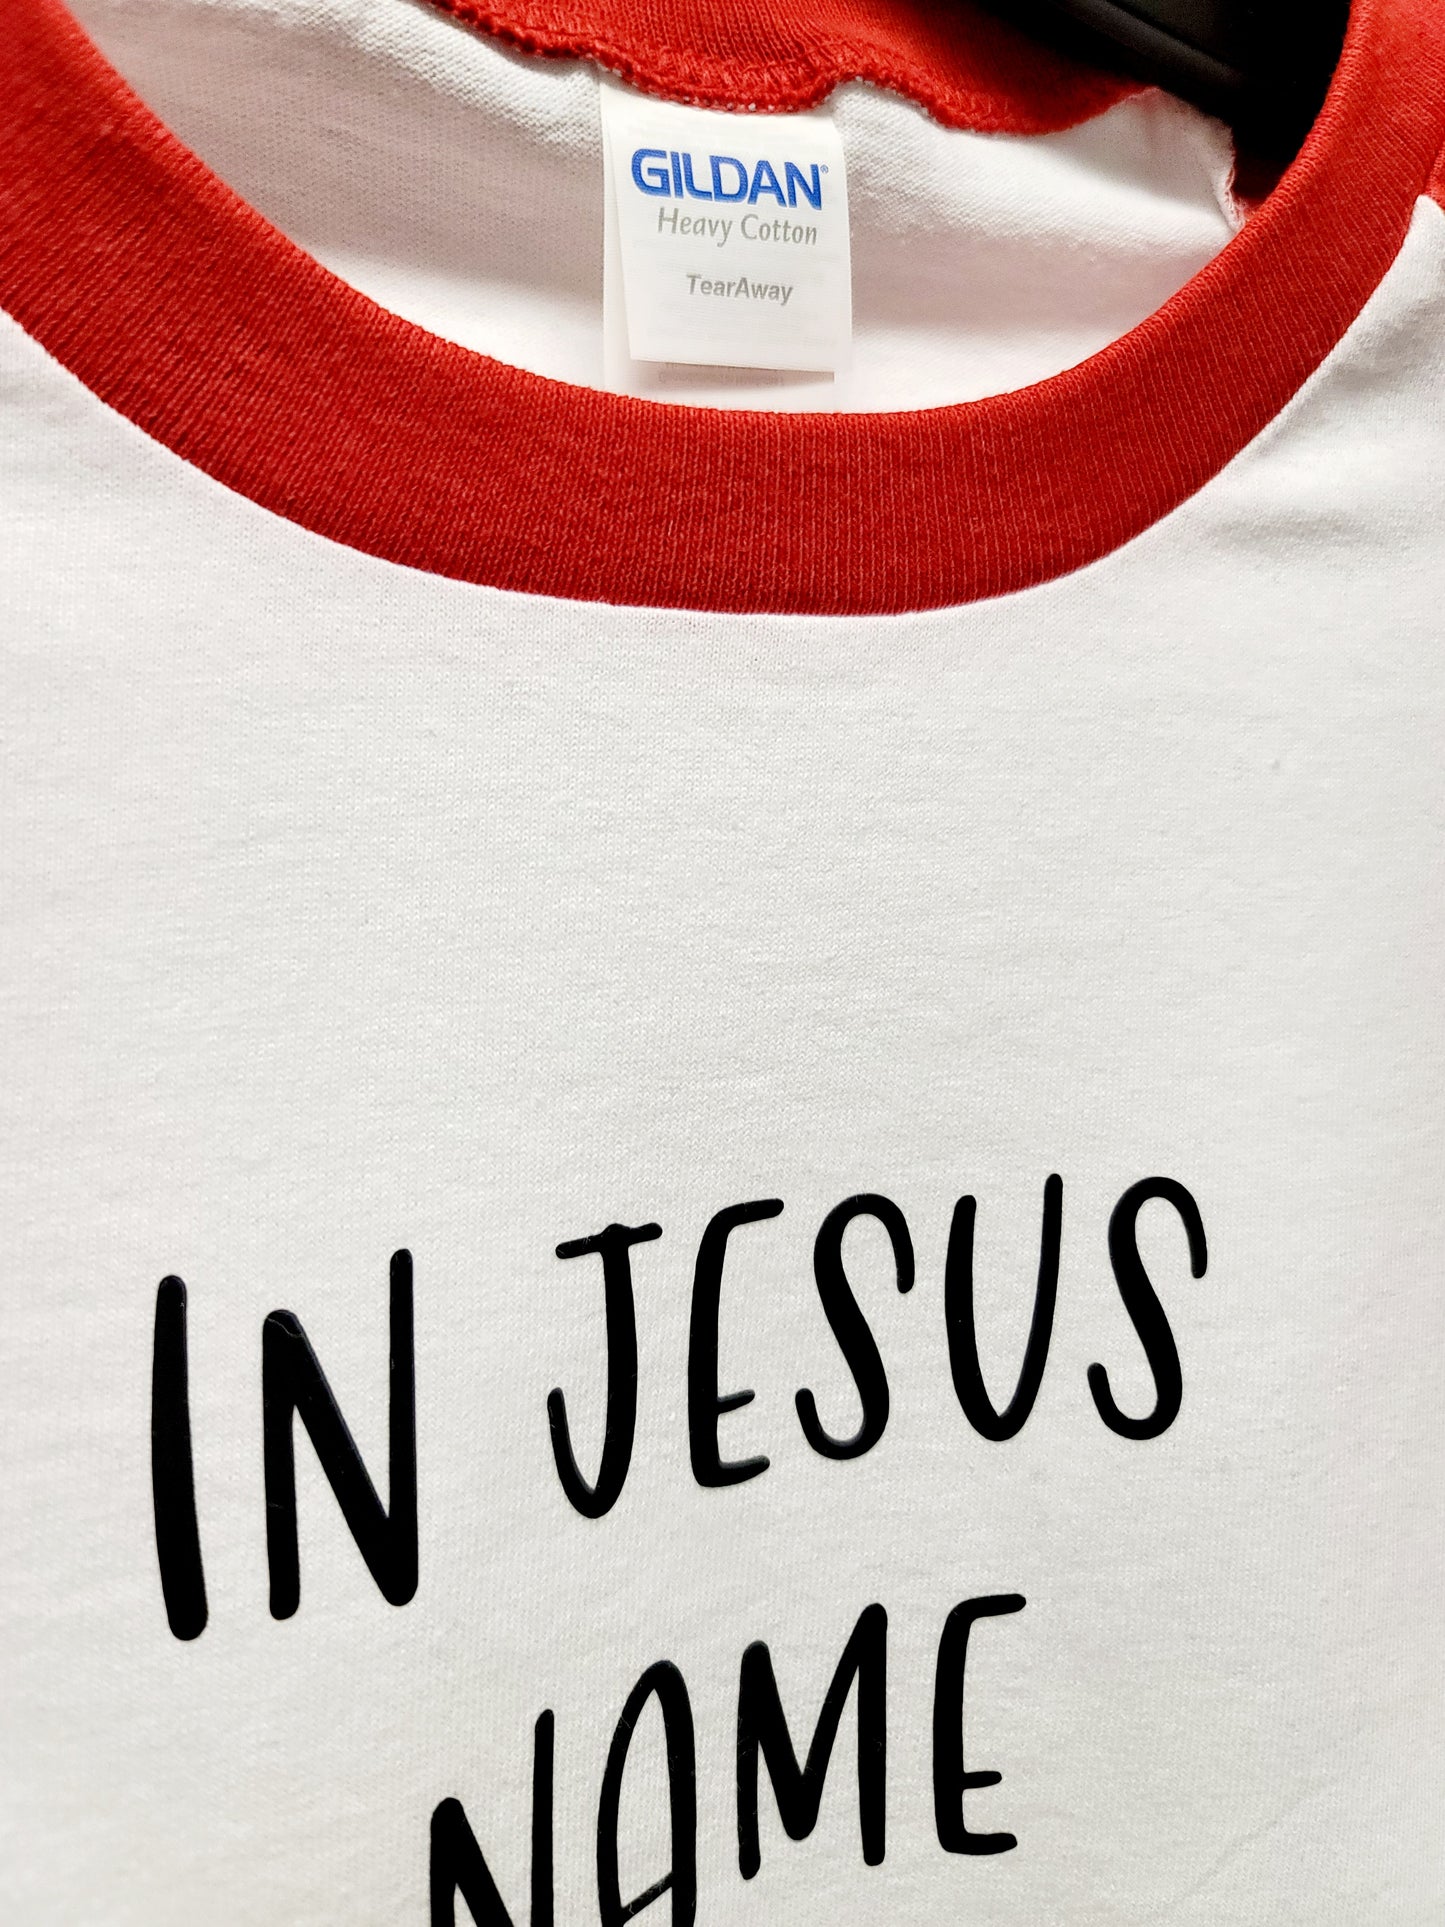 In Jesus name Amen shirt with red raglan sleeve